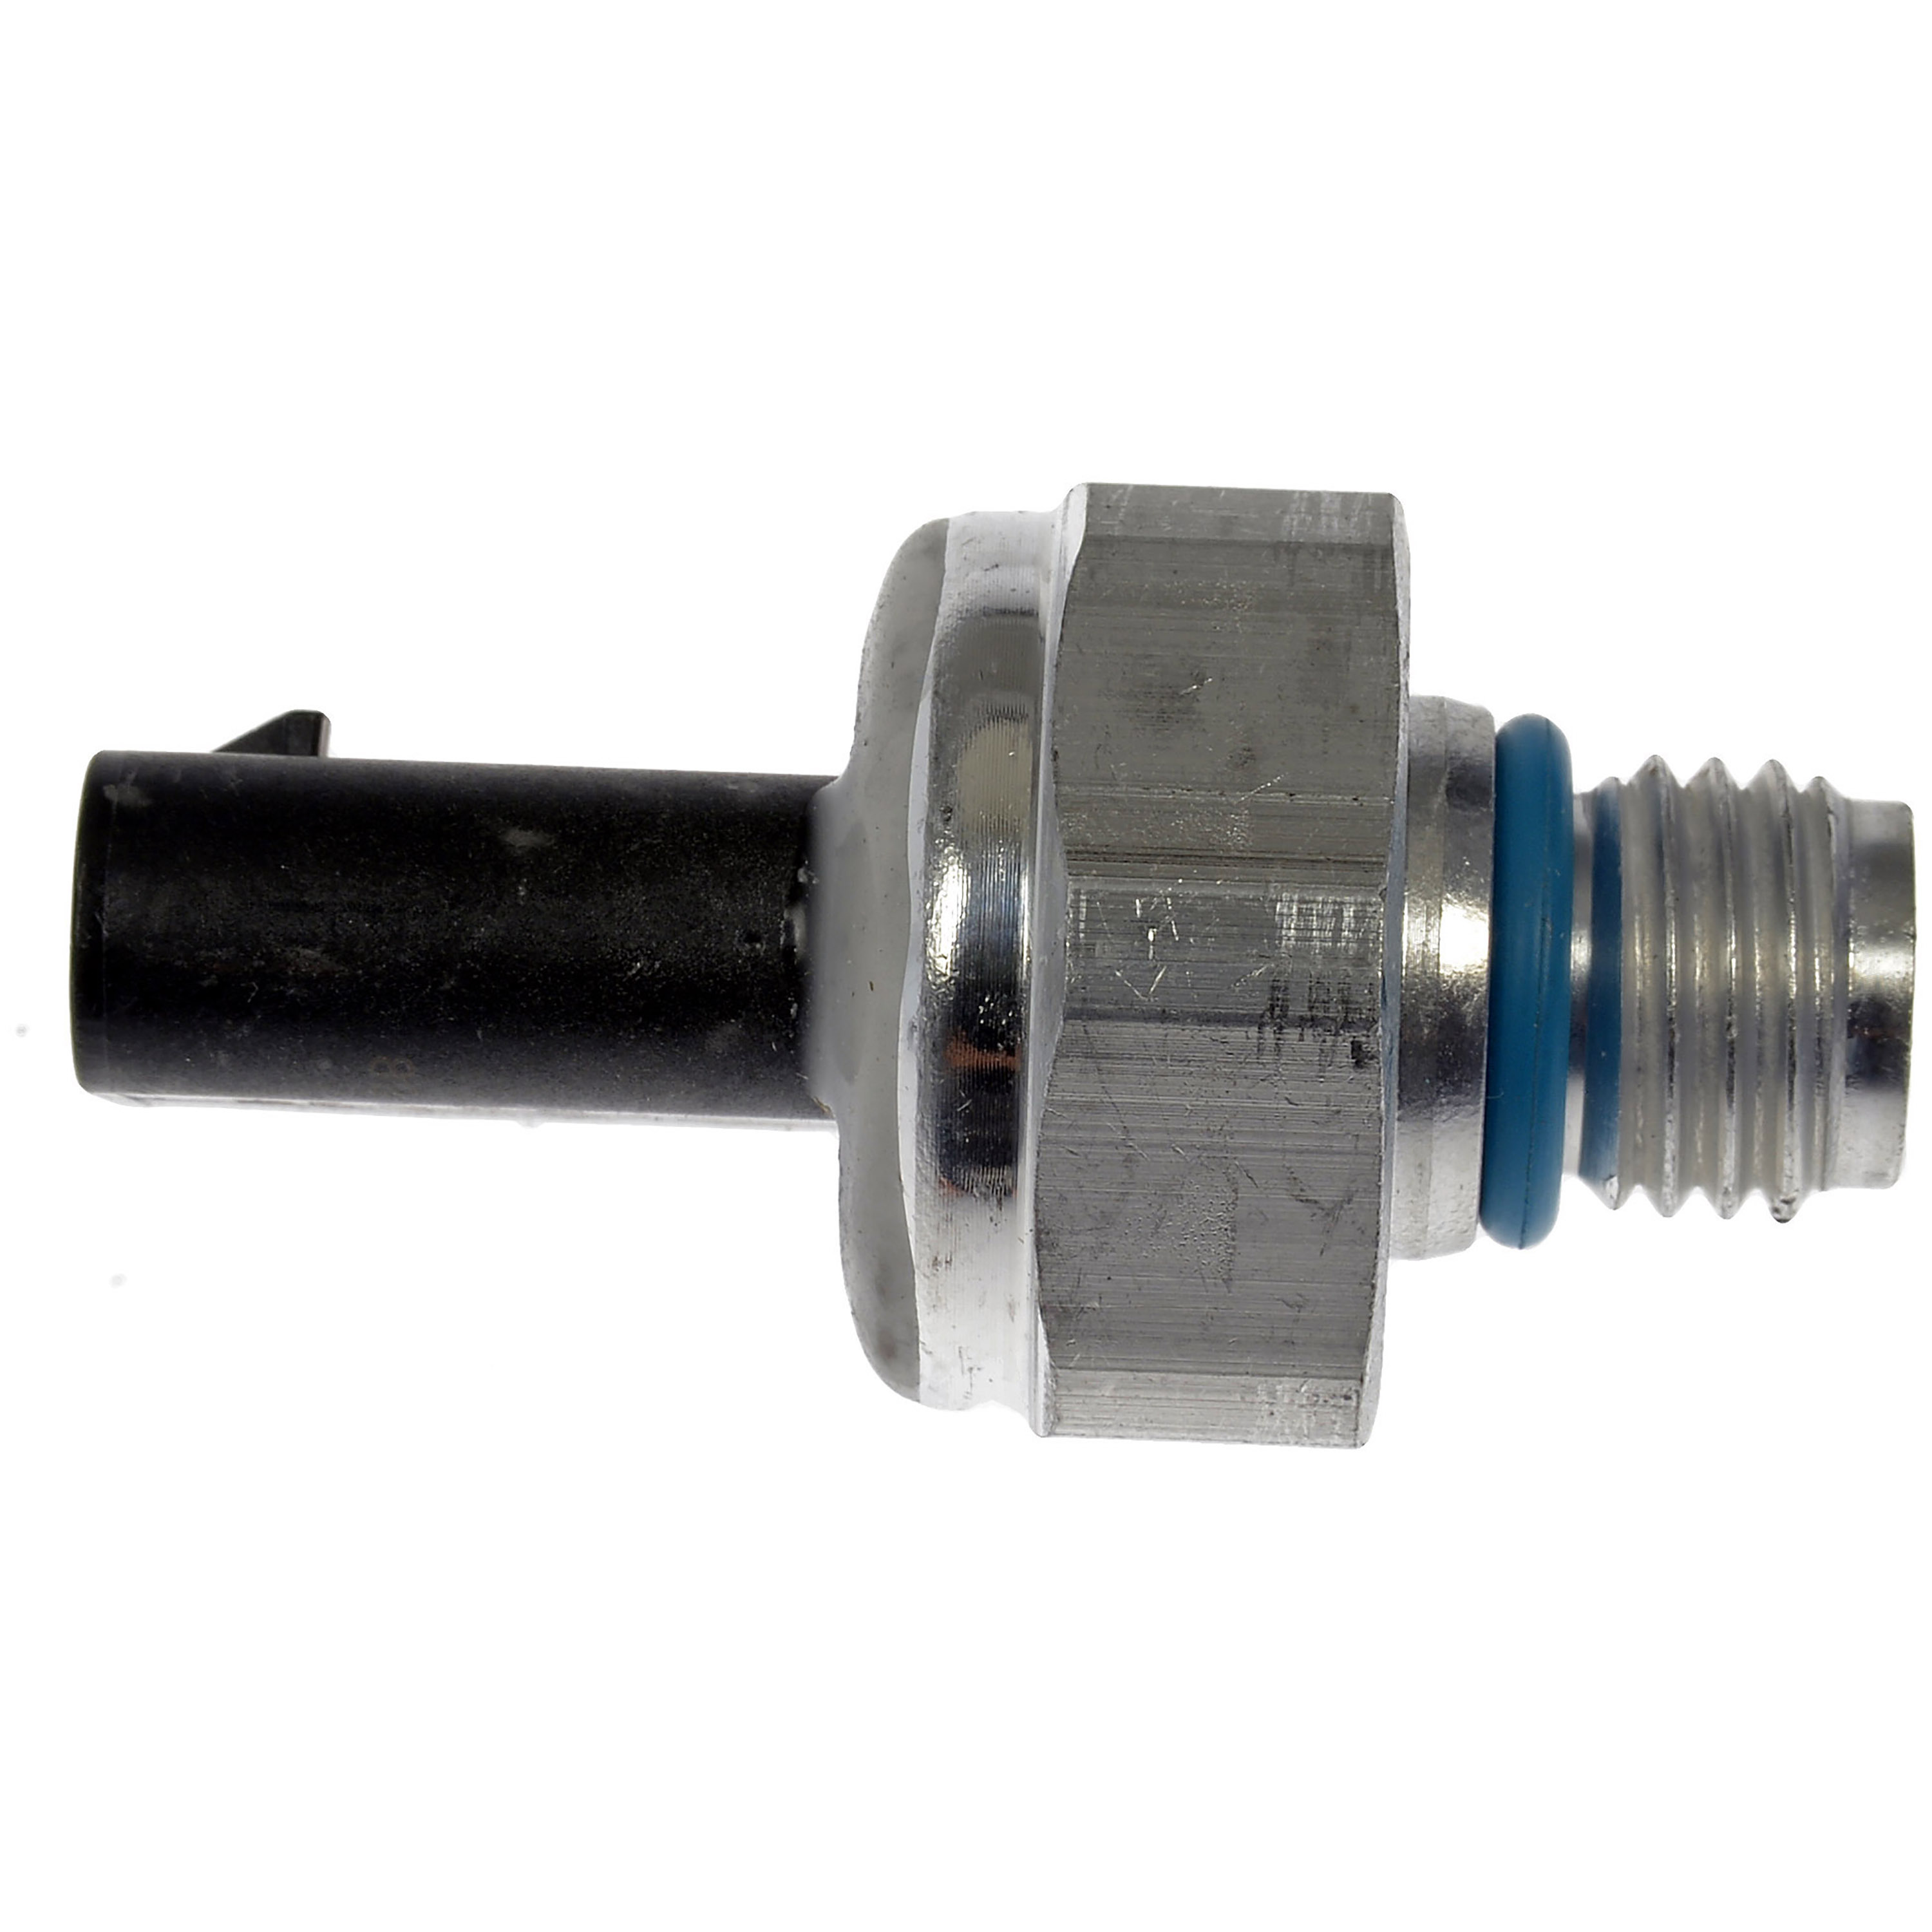 Dorman 926-461 Engine Oil Pressure Sensor for Specific Ford / Lincoln Models, Silver; Black - image 4 of 5